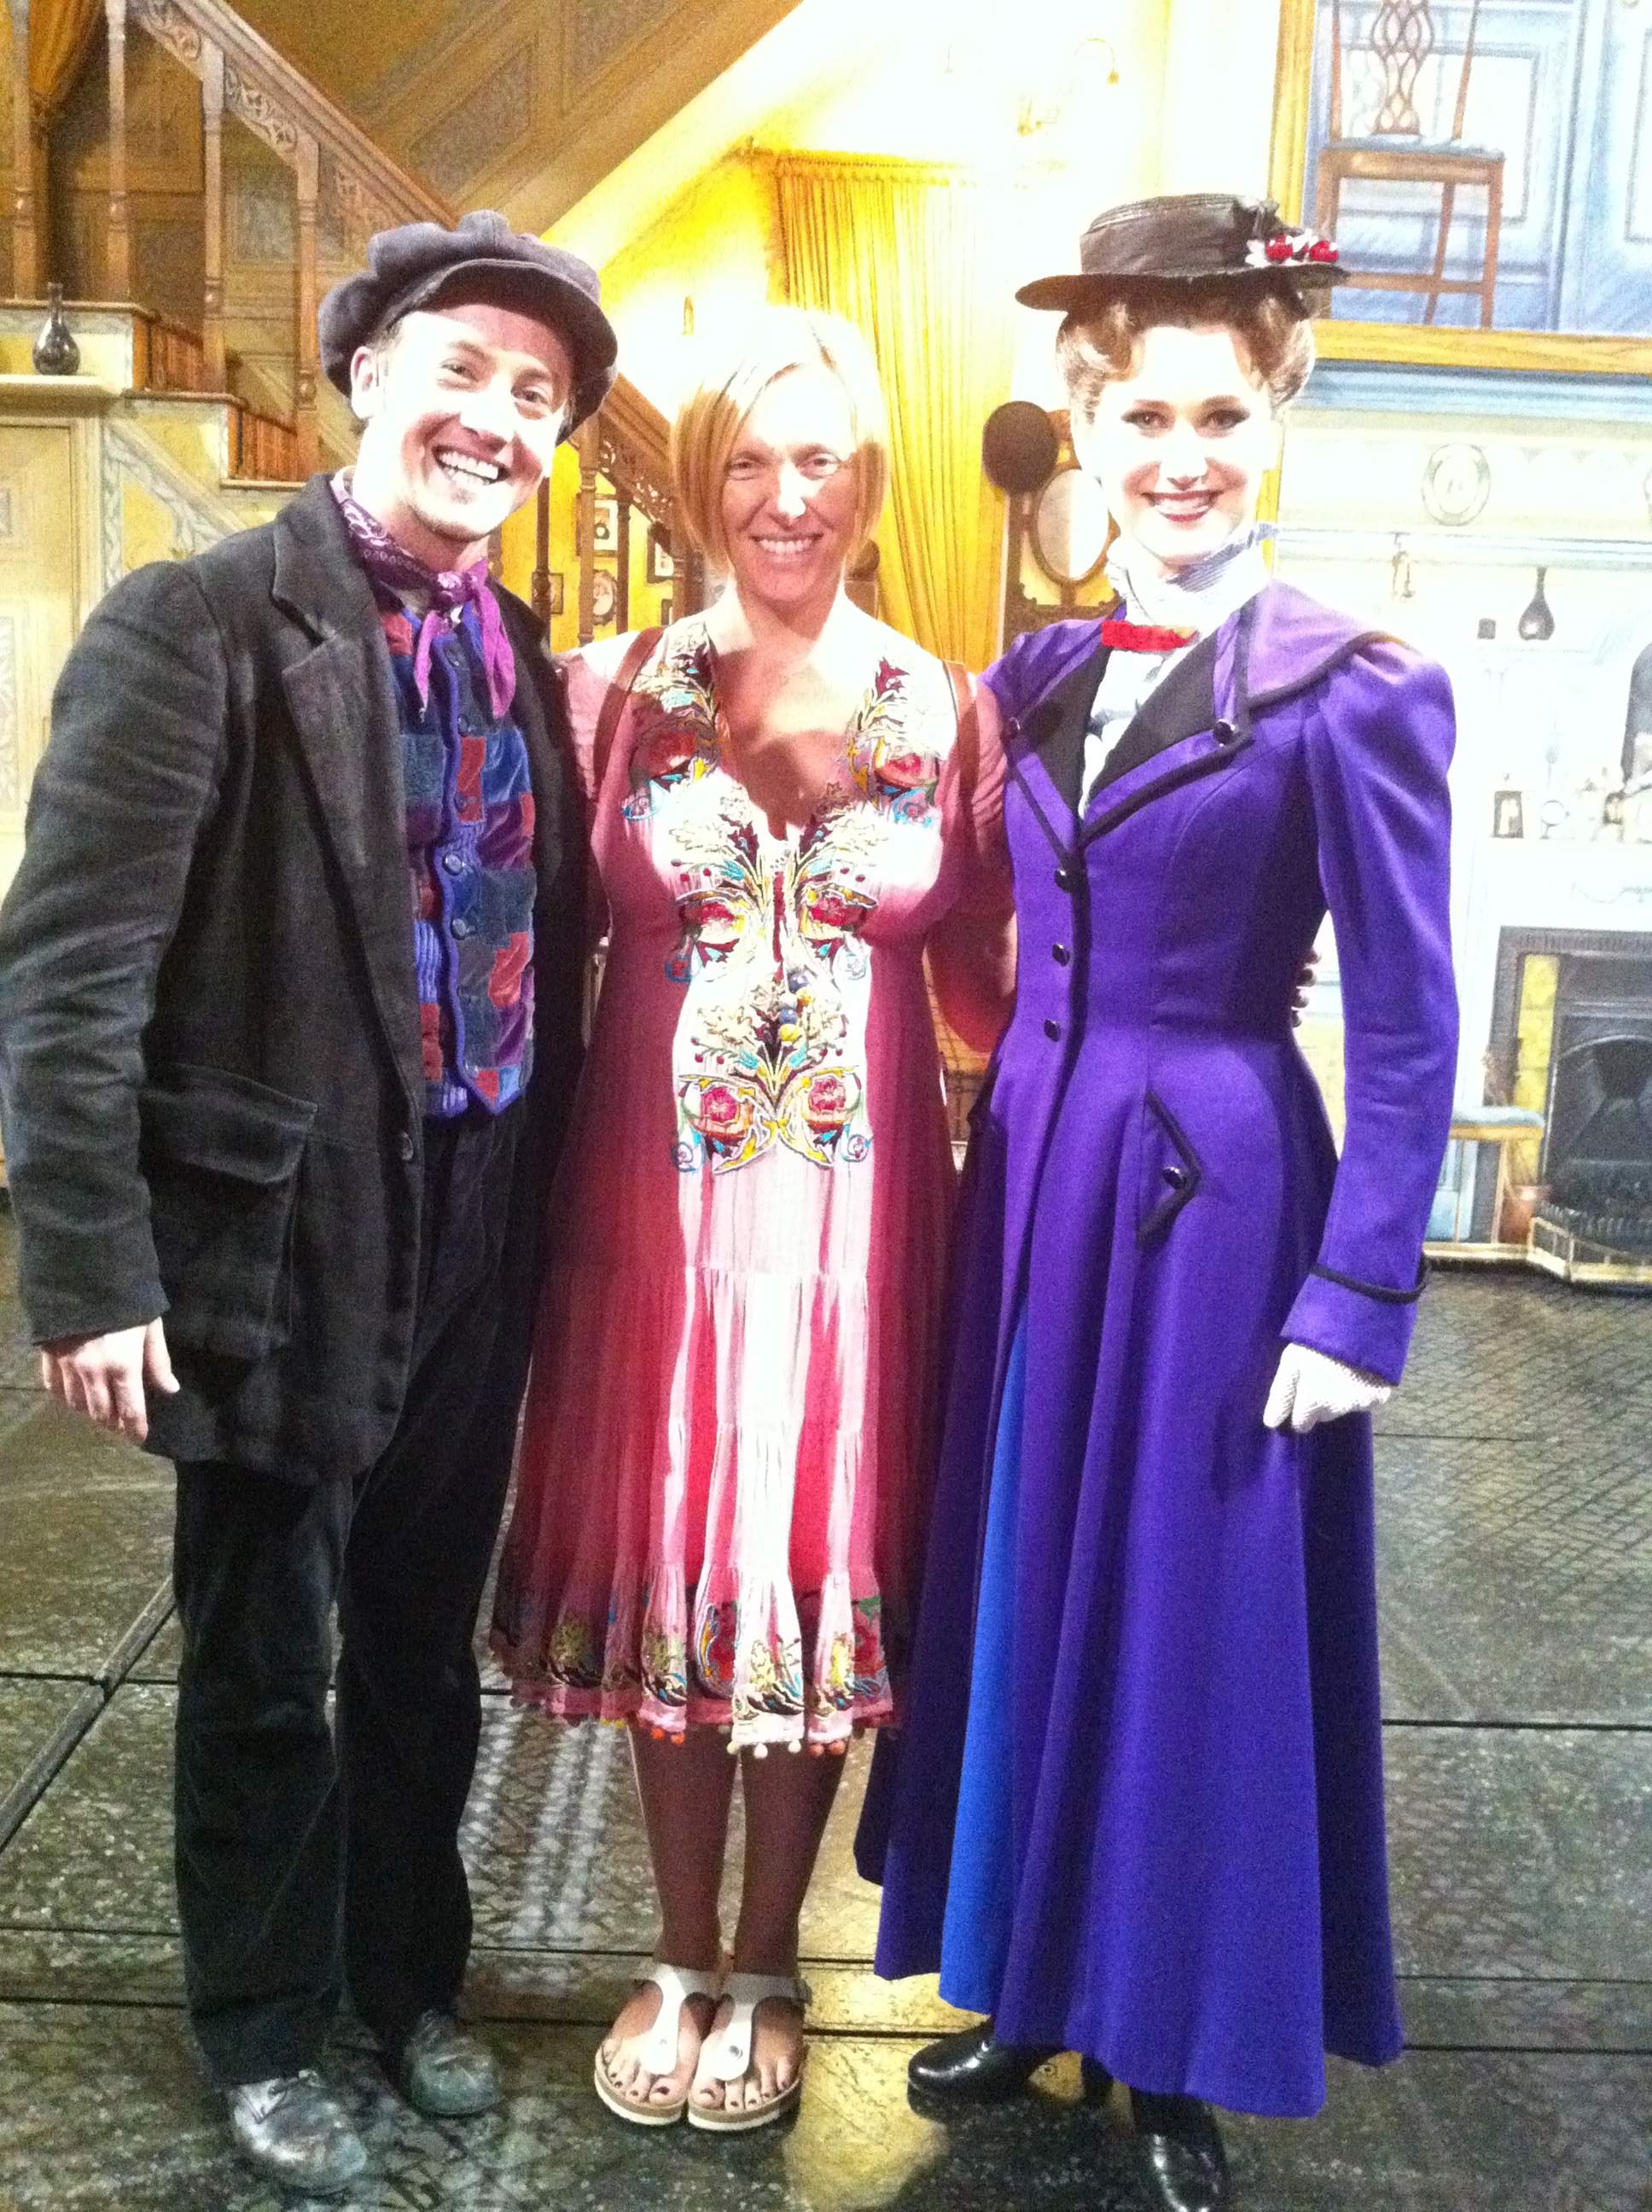 Toni Collette | 
Sarah Bakker as Mary Poppins